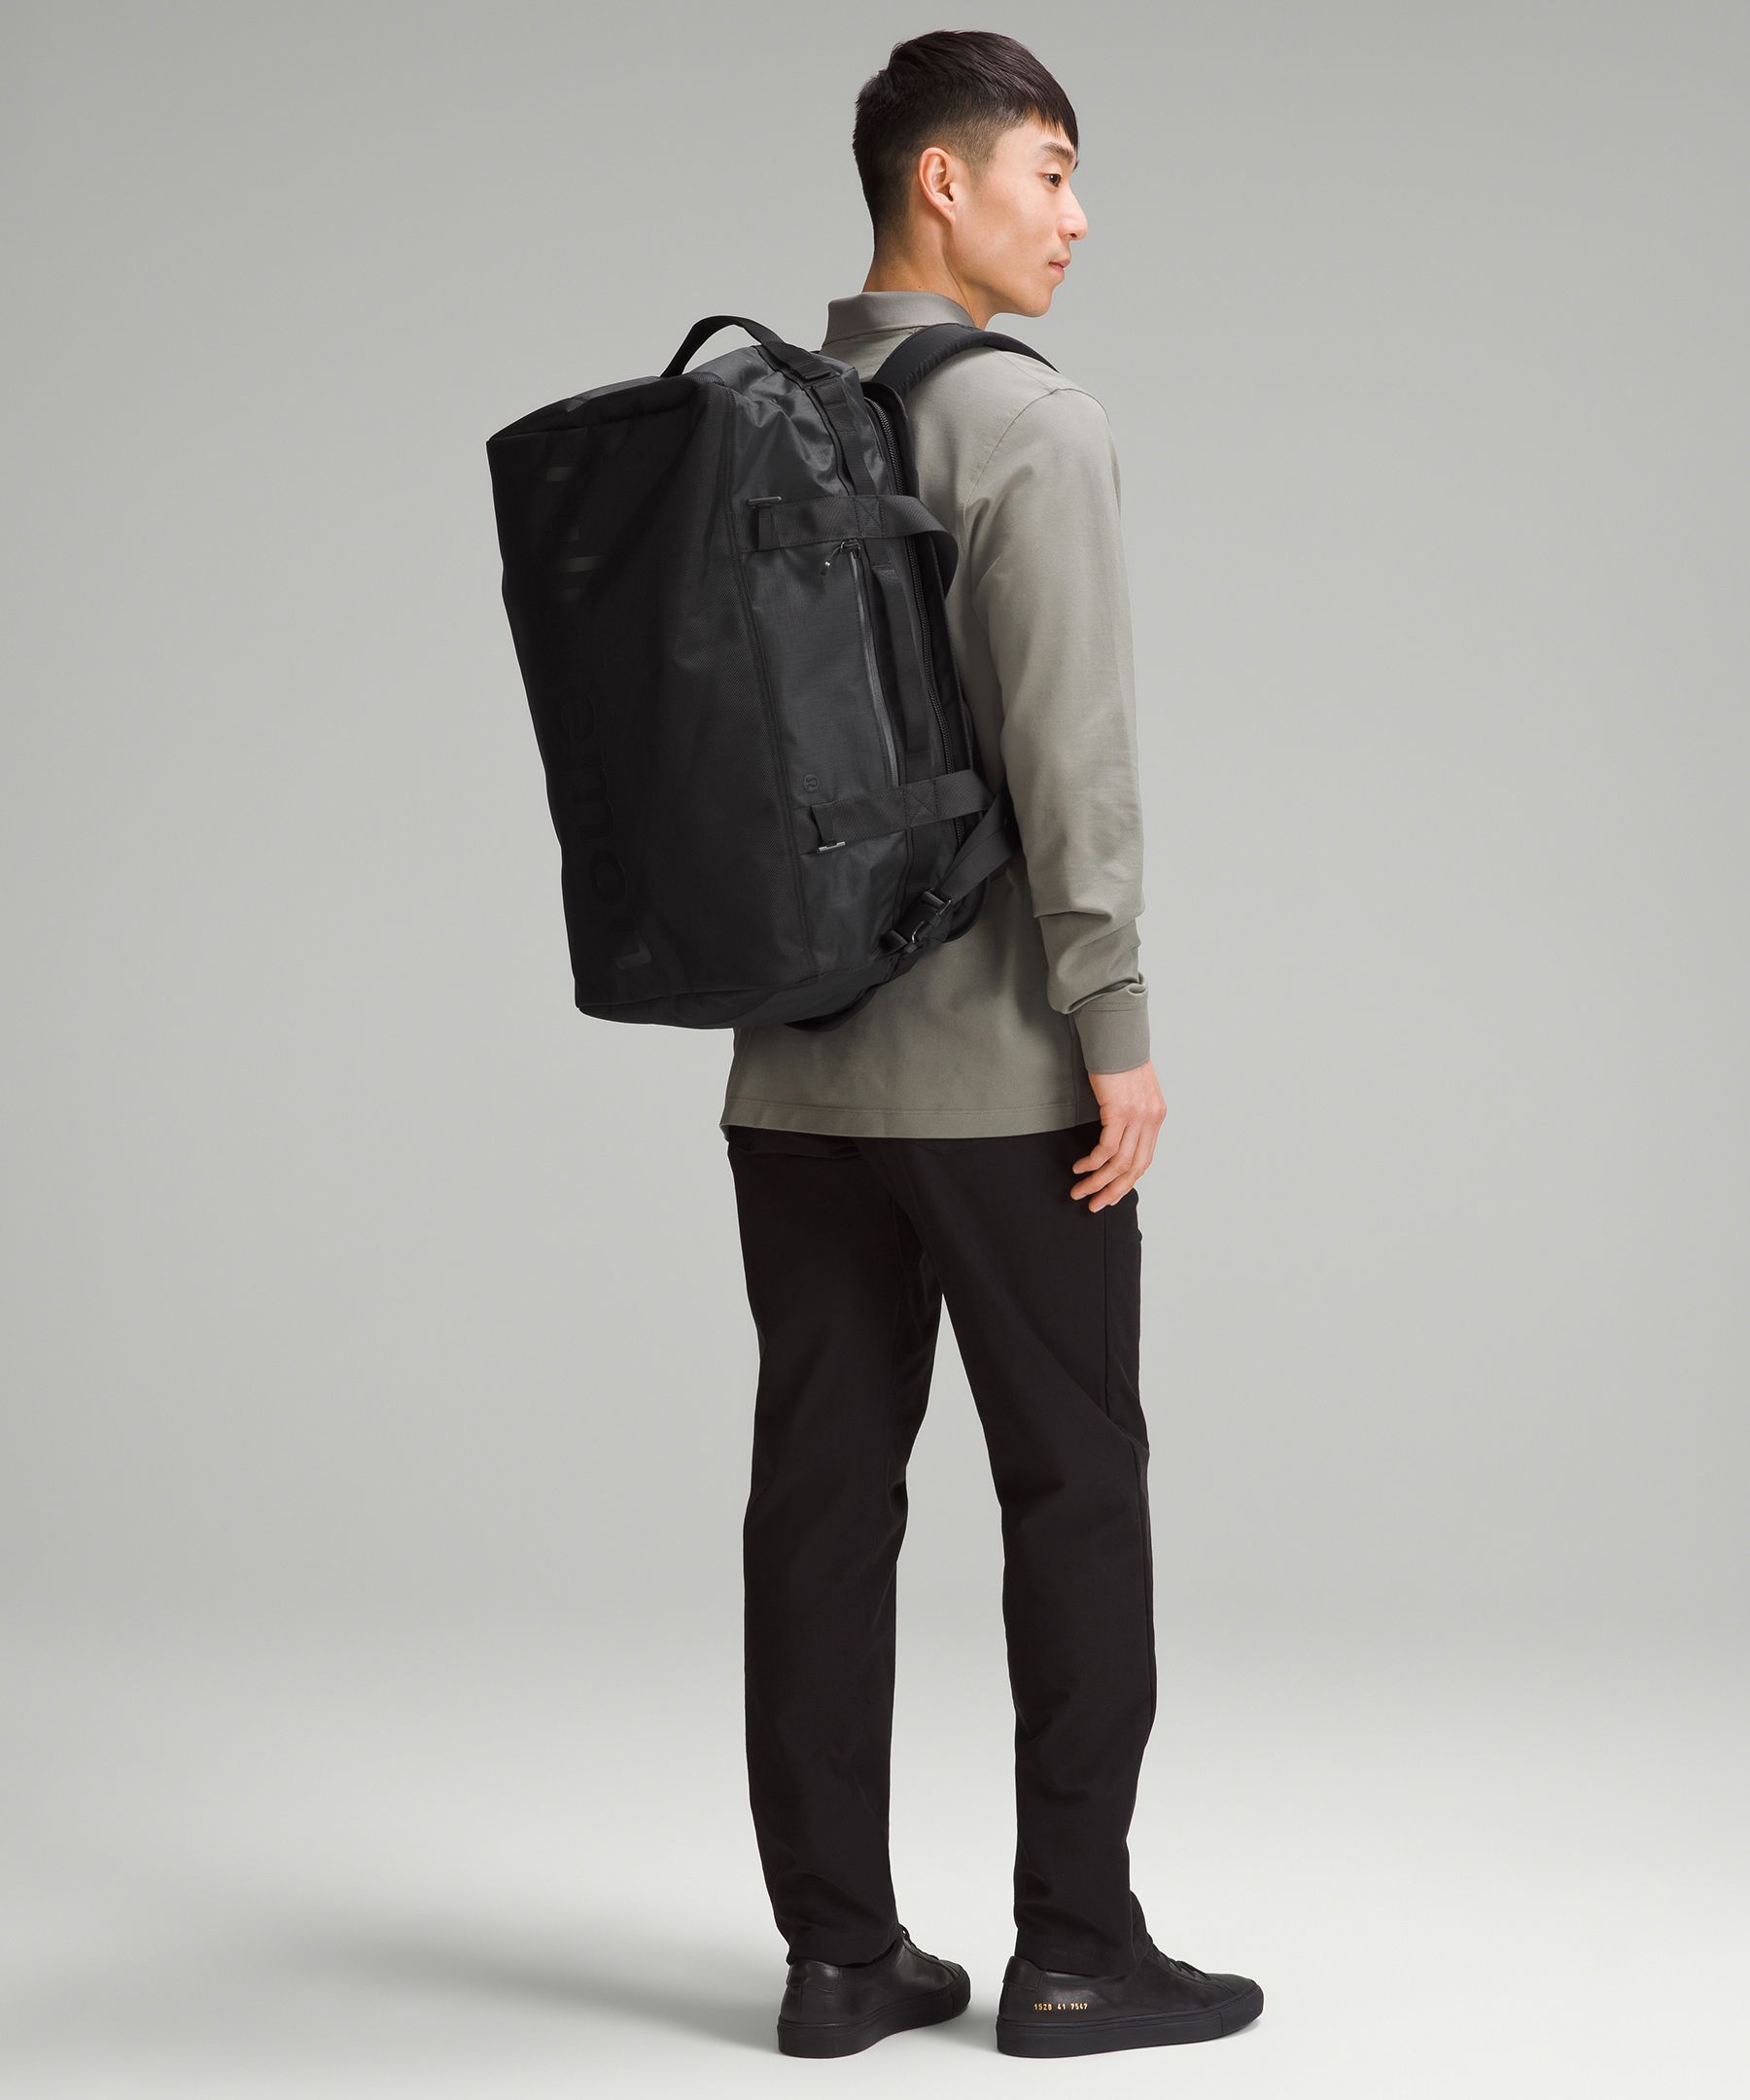 Shop Lululemon 2-in-1 Travel Duffle Backpack 45l